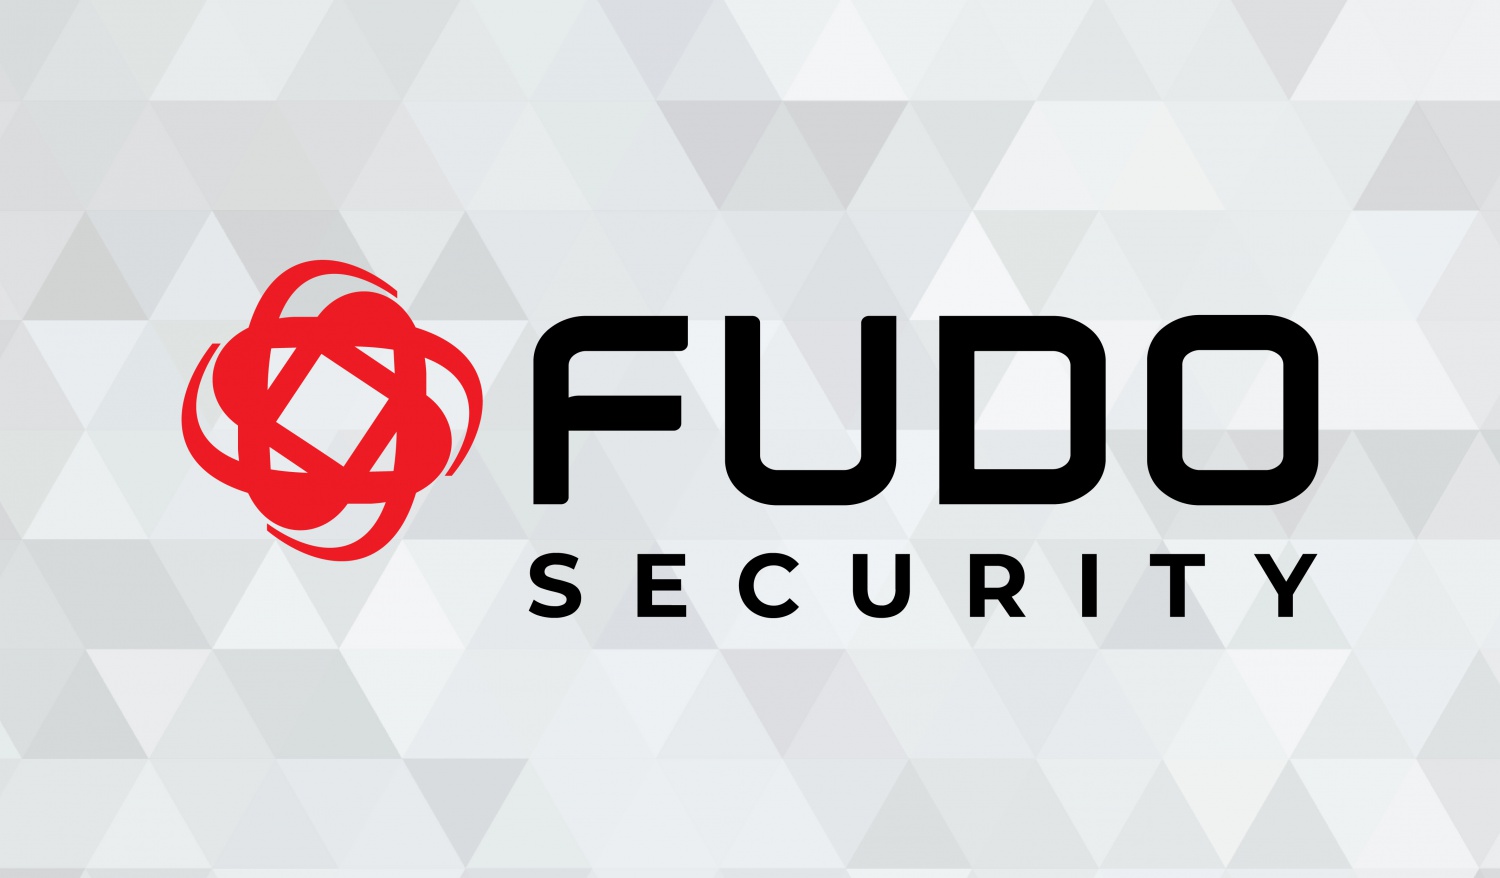 Fudo Security стал партнером ГК Axxtel